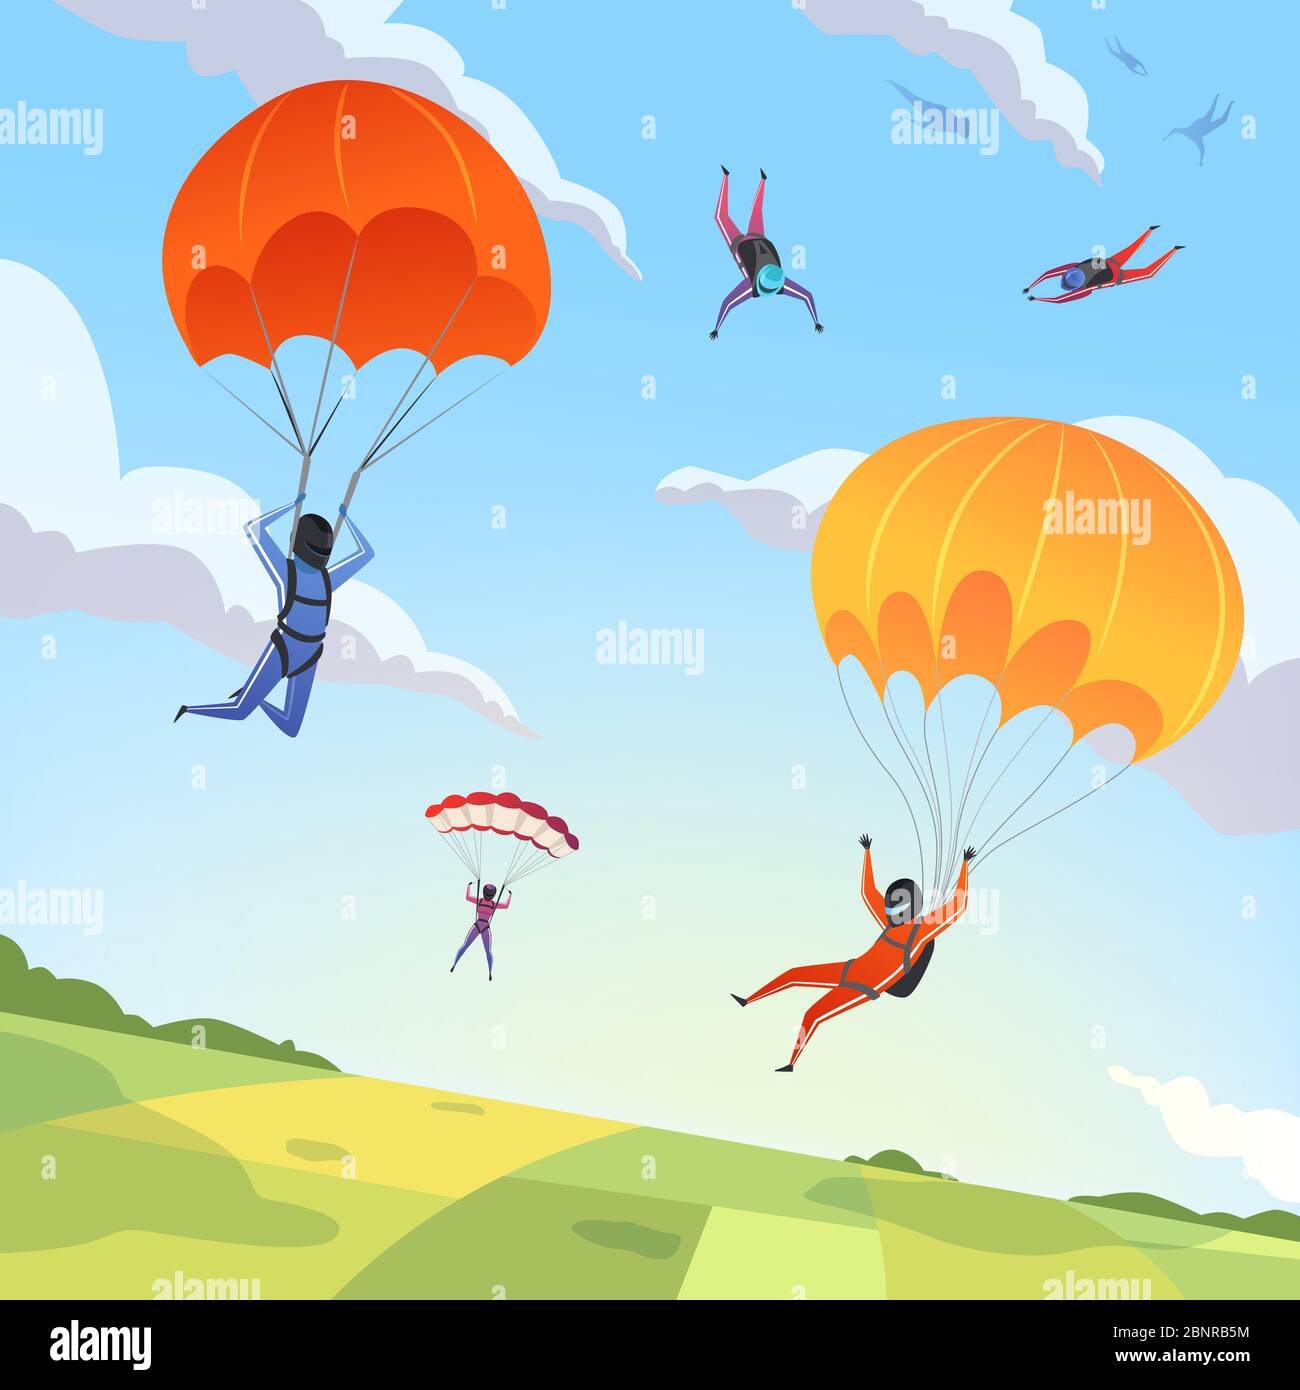 Fallschirmspringer Himmel. Extreme Sport Hobbies Adrenalin Charakter fliegen Aktion Pose Fallschirmspringen Paraplaner Vektor Cartoon Hintergrund Stock Vektor